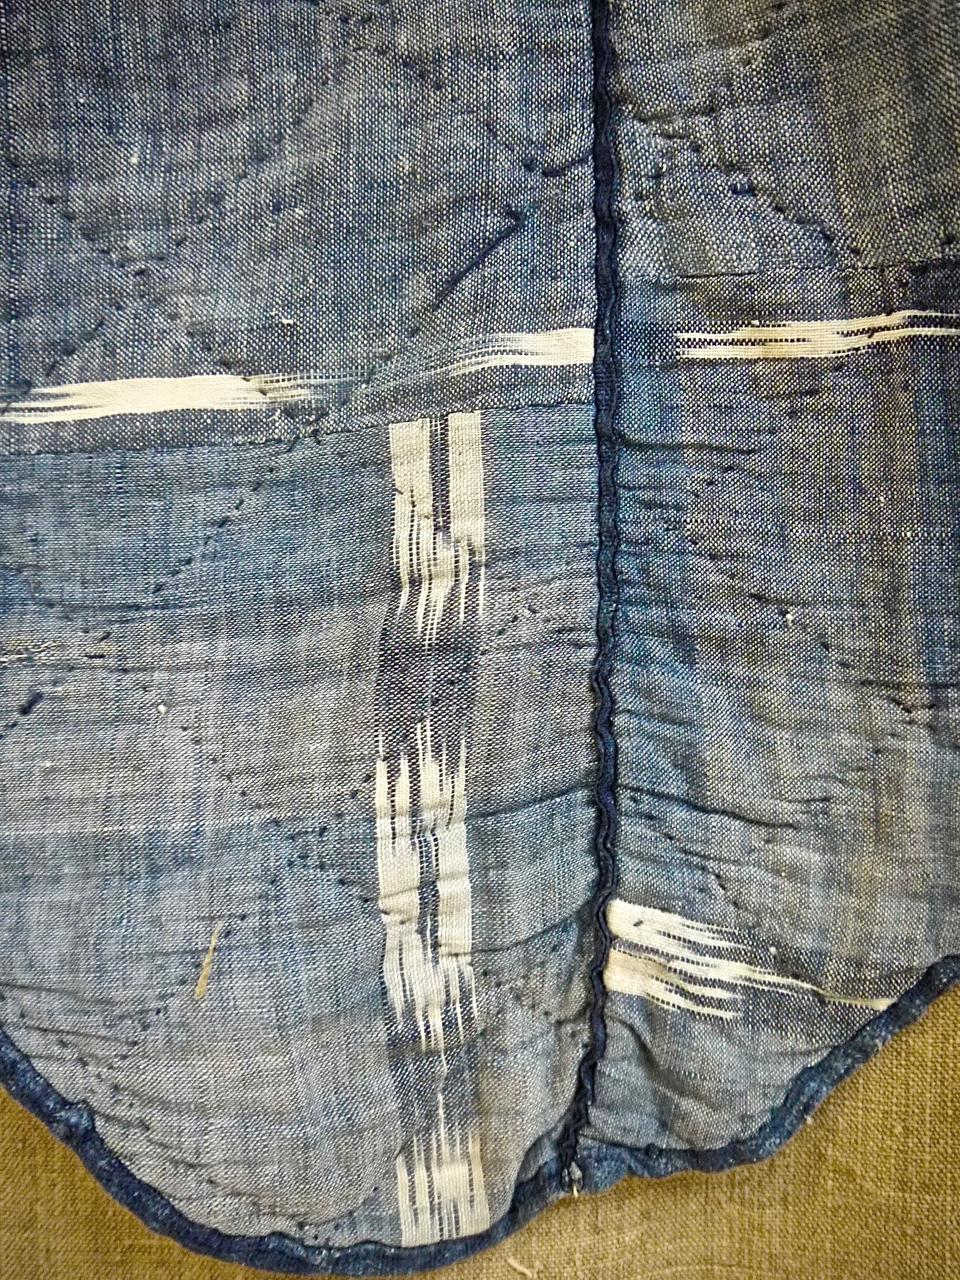 Indigo Flamme Ikat Cotton Pelmet French 19th Century For Sale 2